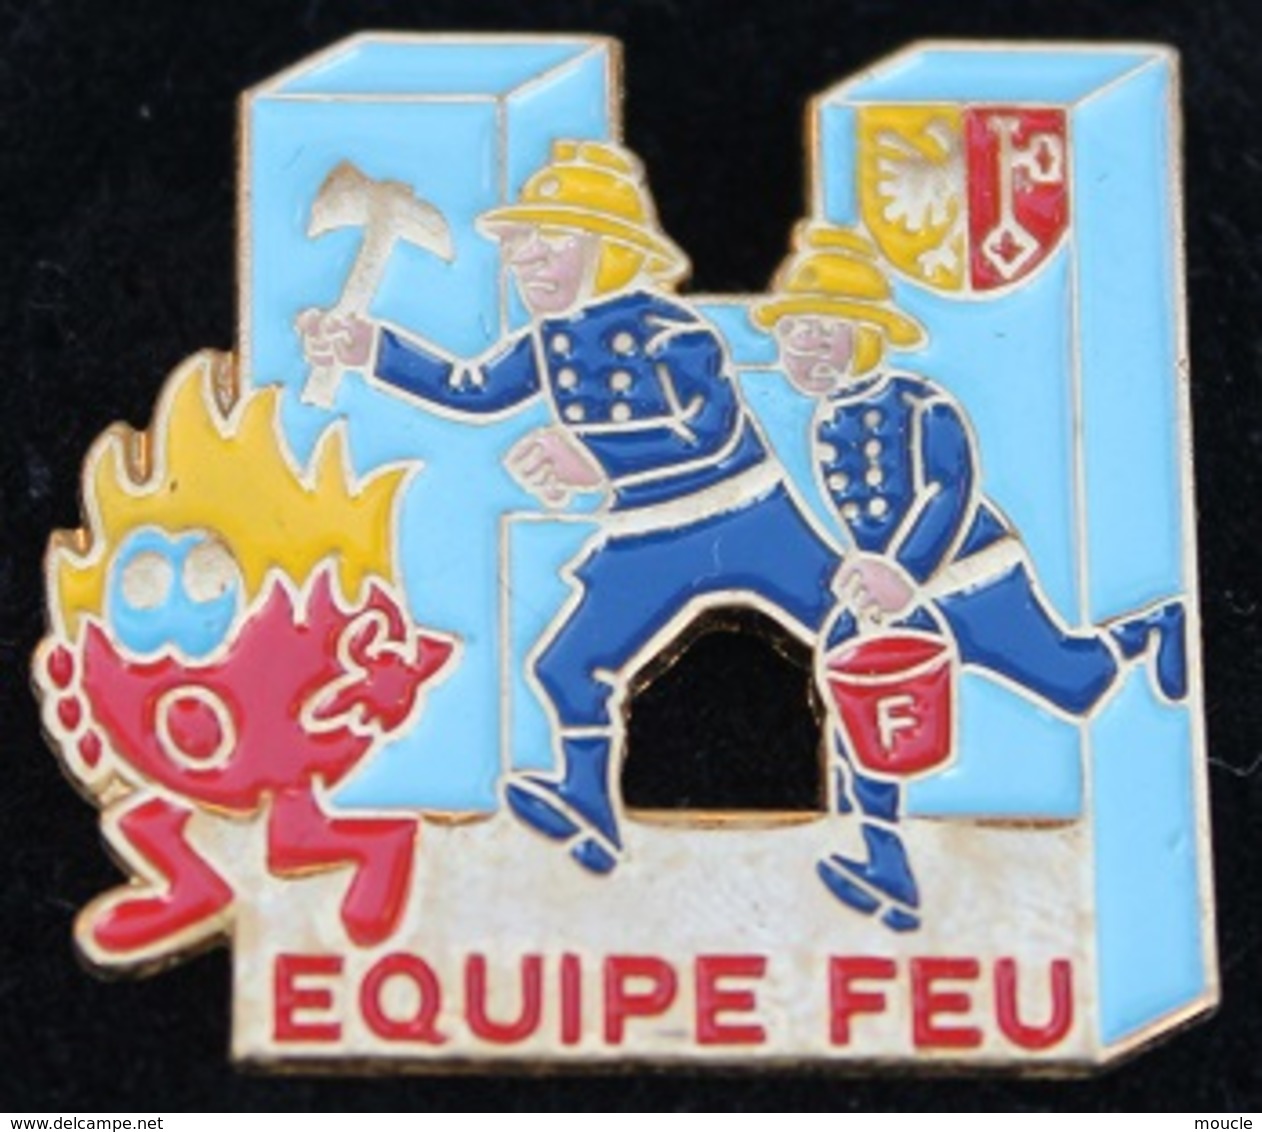 SAPEURS POMPIERS DES HUG - HÔPITAL UNIVERSITAIRE DE GENEVE - EQUIPE FEU - SUISSE -      (21) - Brandweerman